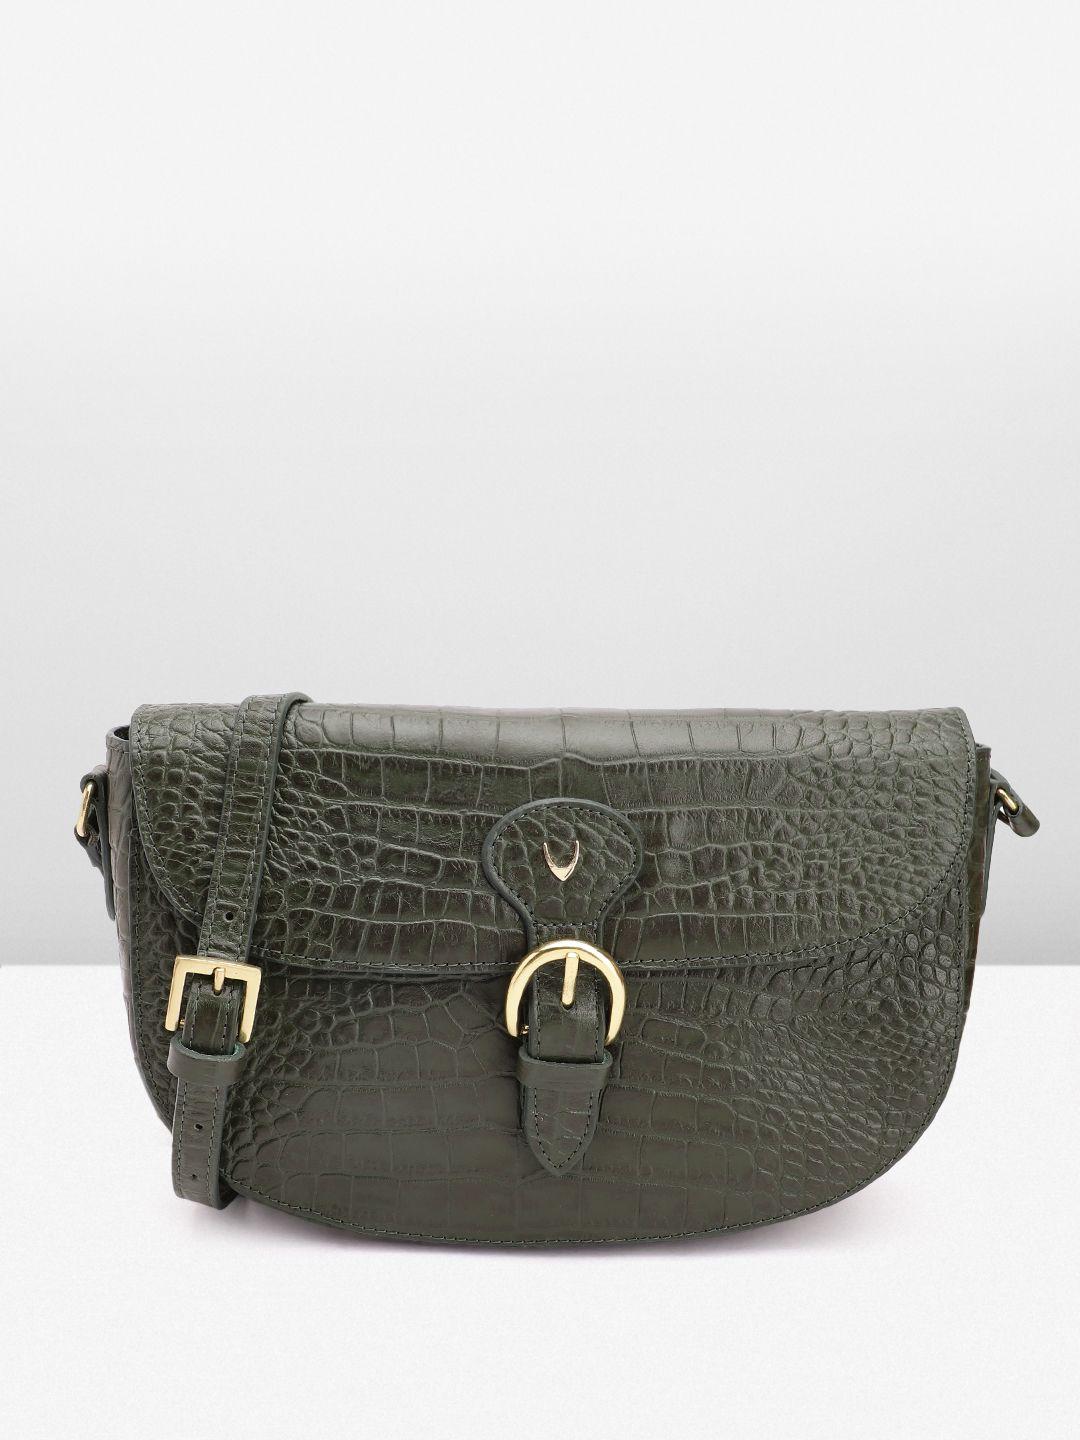 hidesign croc-textured leather half moon sling bag